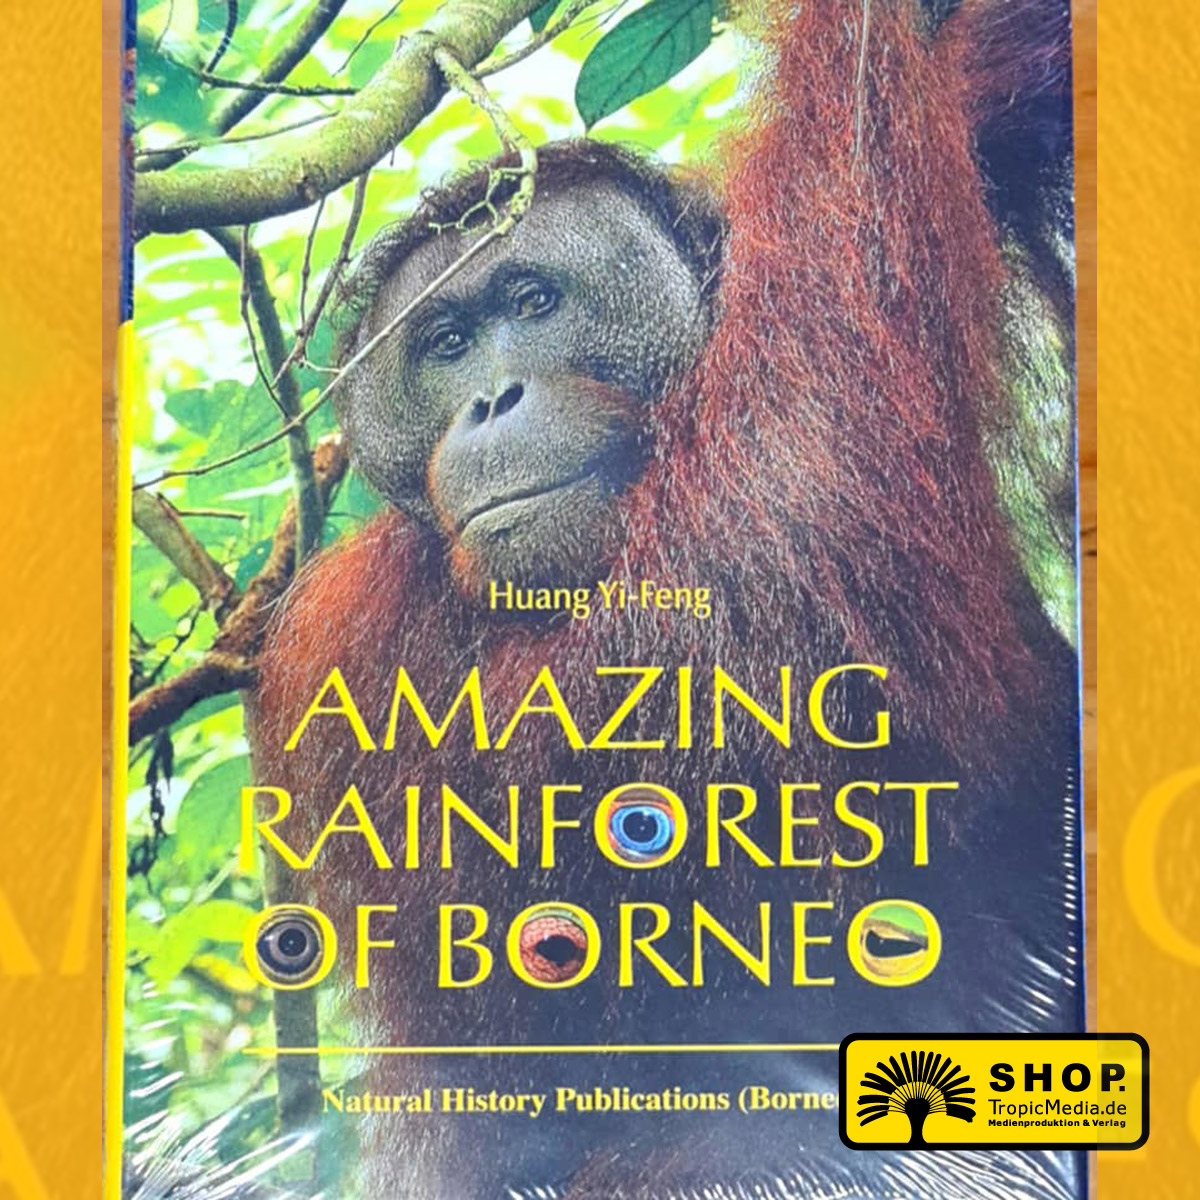 Amazing Rainforest of Borneo (Huang Yi-Feng)